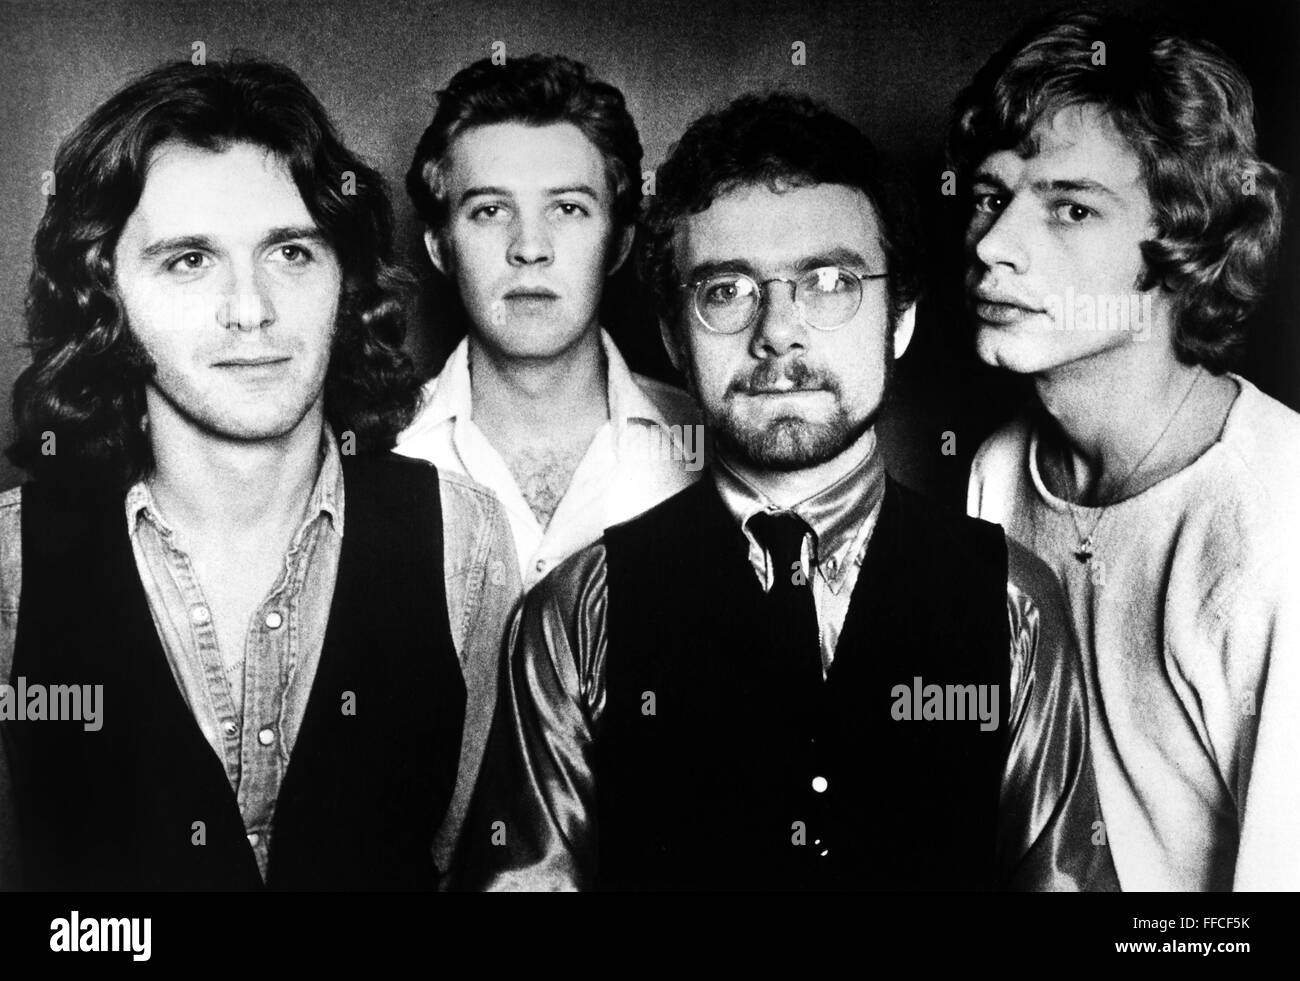 KING CRIMSON, 1974. /nAmerican rock band. Photographed 1974. Stock Photo